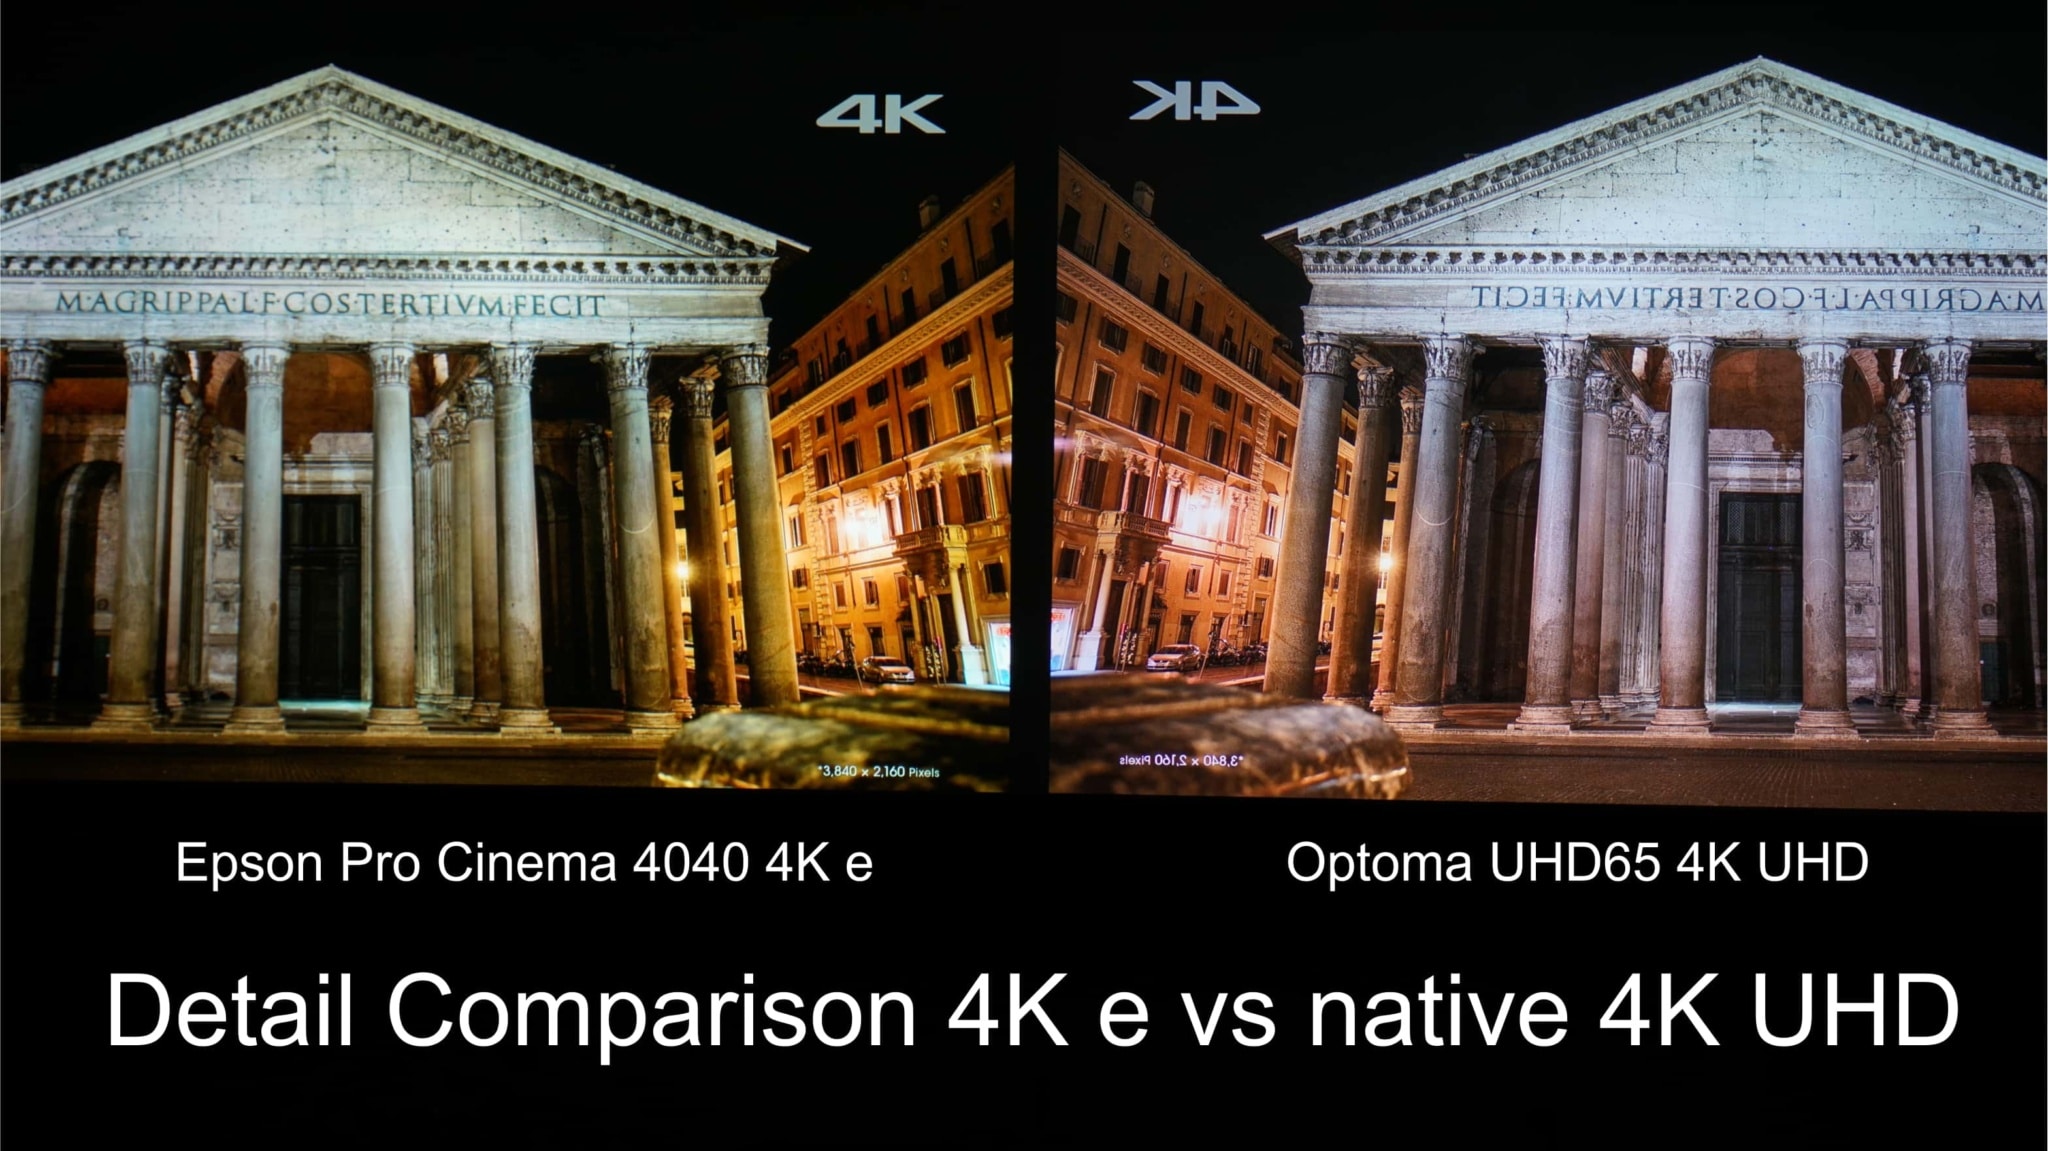 Sony VPL-VW365ES vs Epson Pro Cinema 4040: Detail comparison 4K e vs native 4K UHD